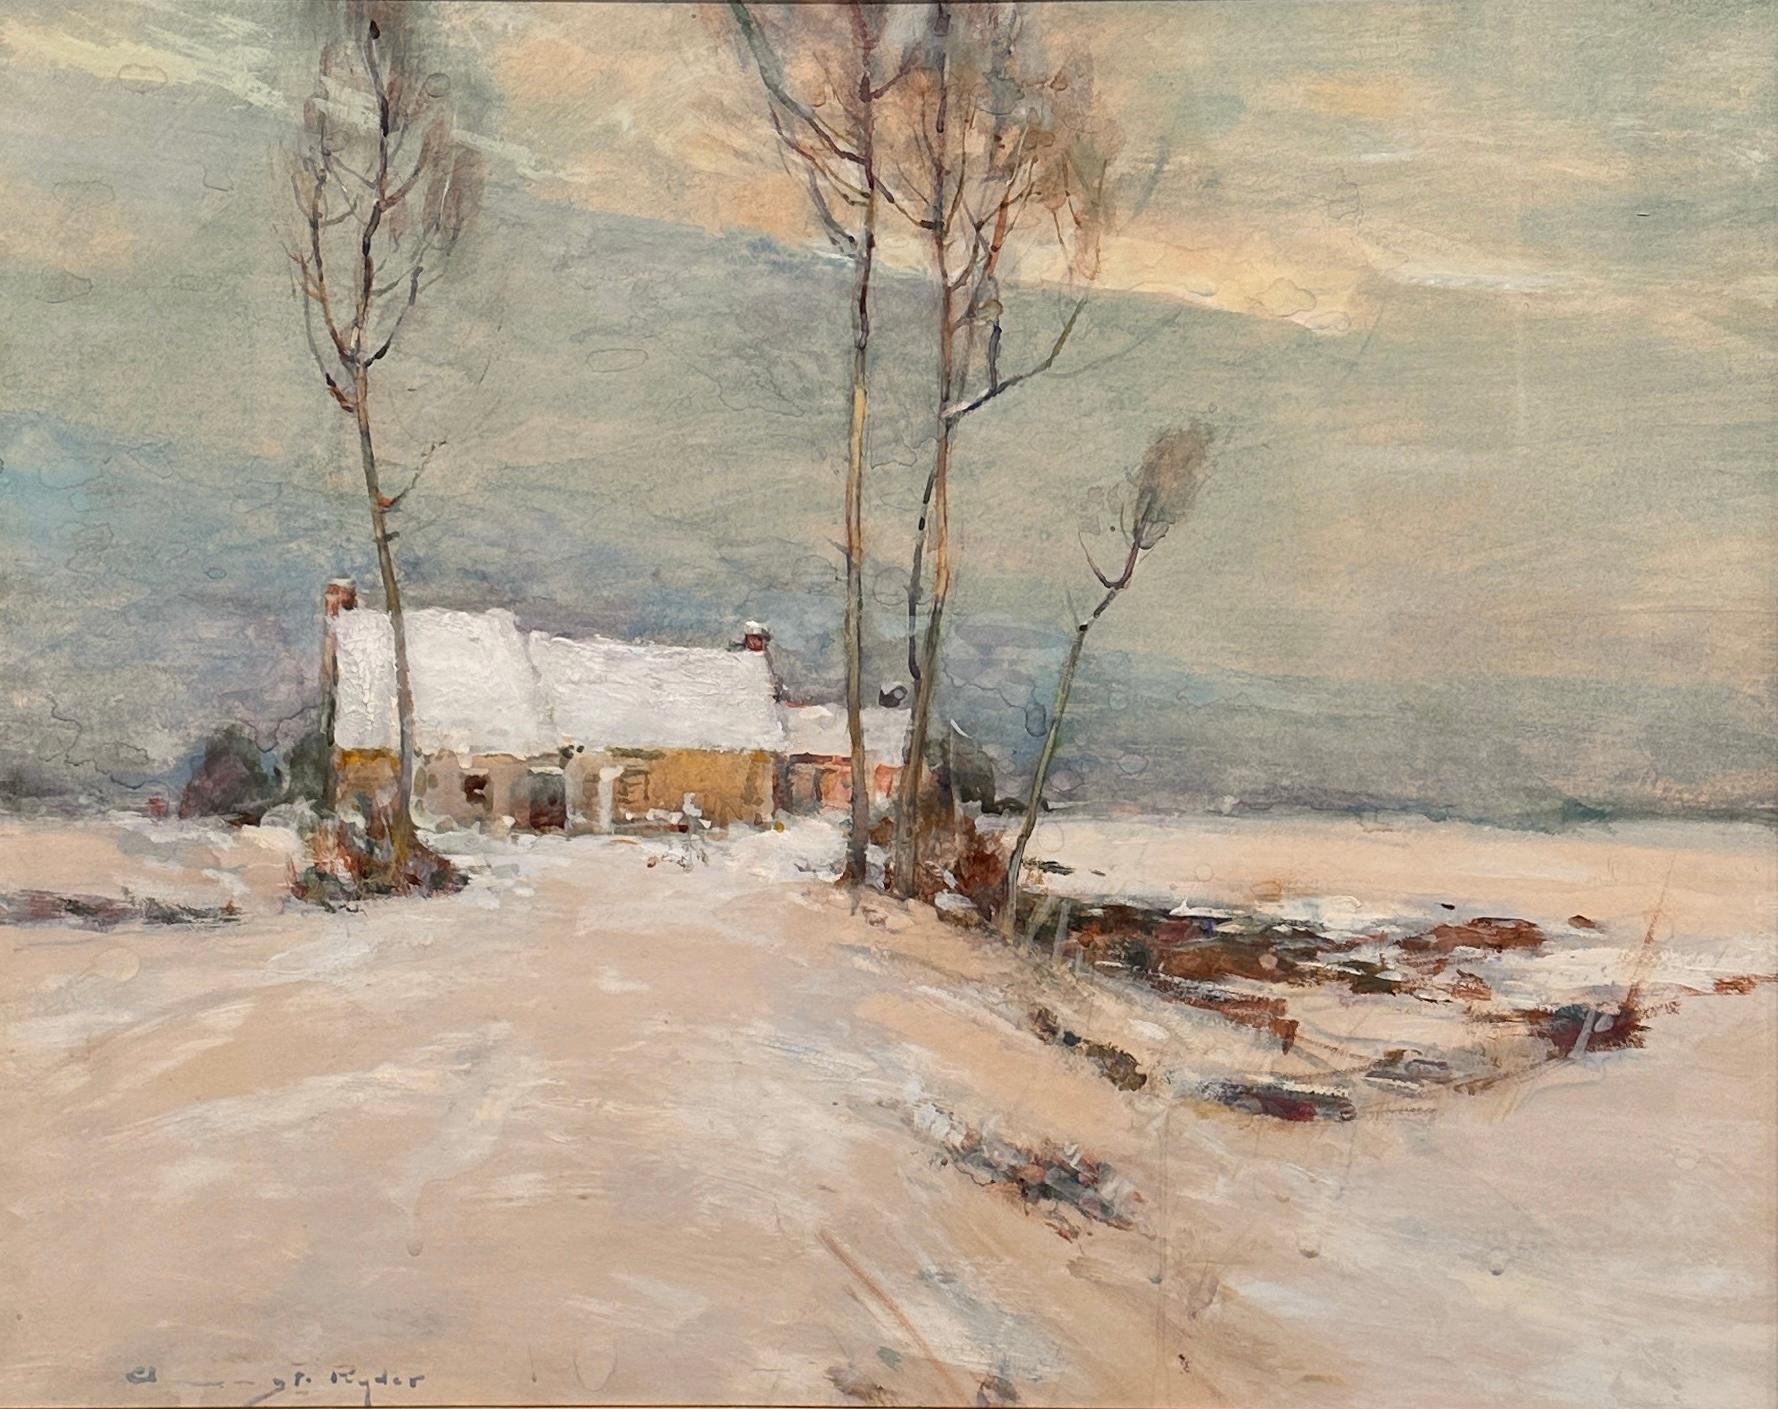 Chauncey Ryder  Landscape Painting - "The Quiet of Winter" - American Postimpressionist, Landscape Artist